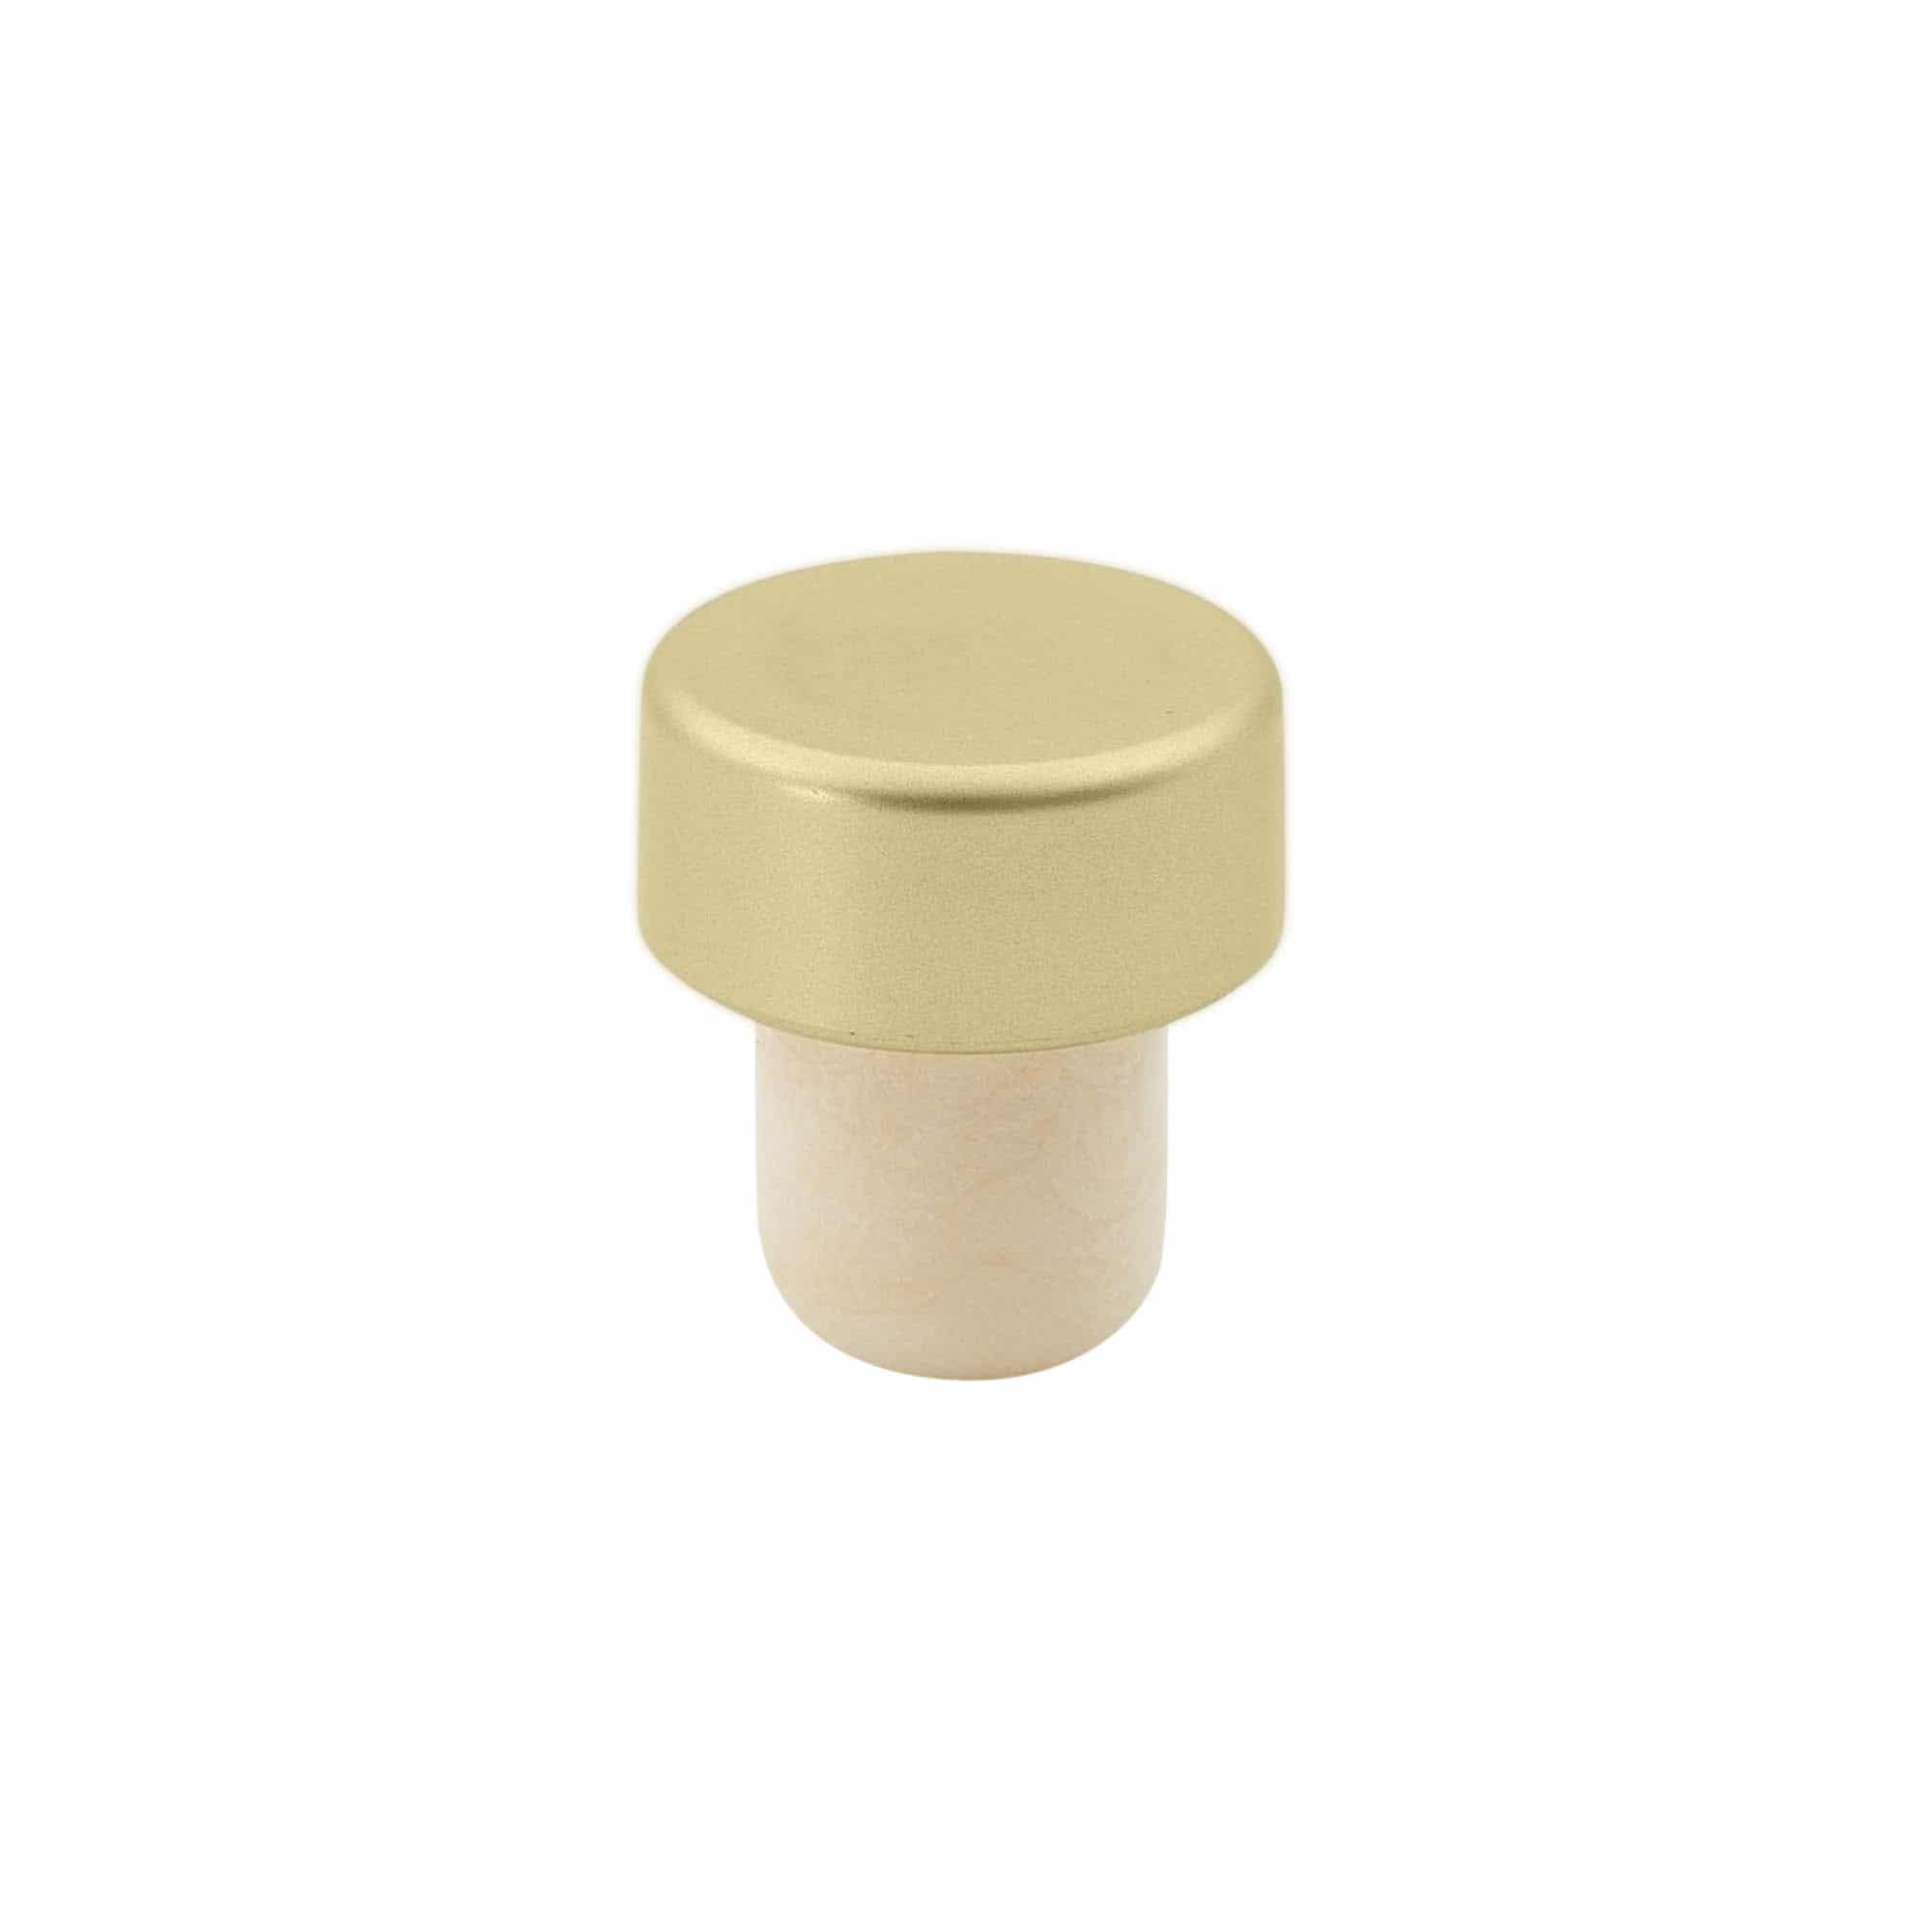 19 mm mushroom cork, plastic, gold, for opening: cork